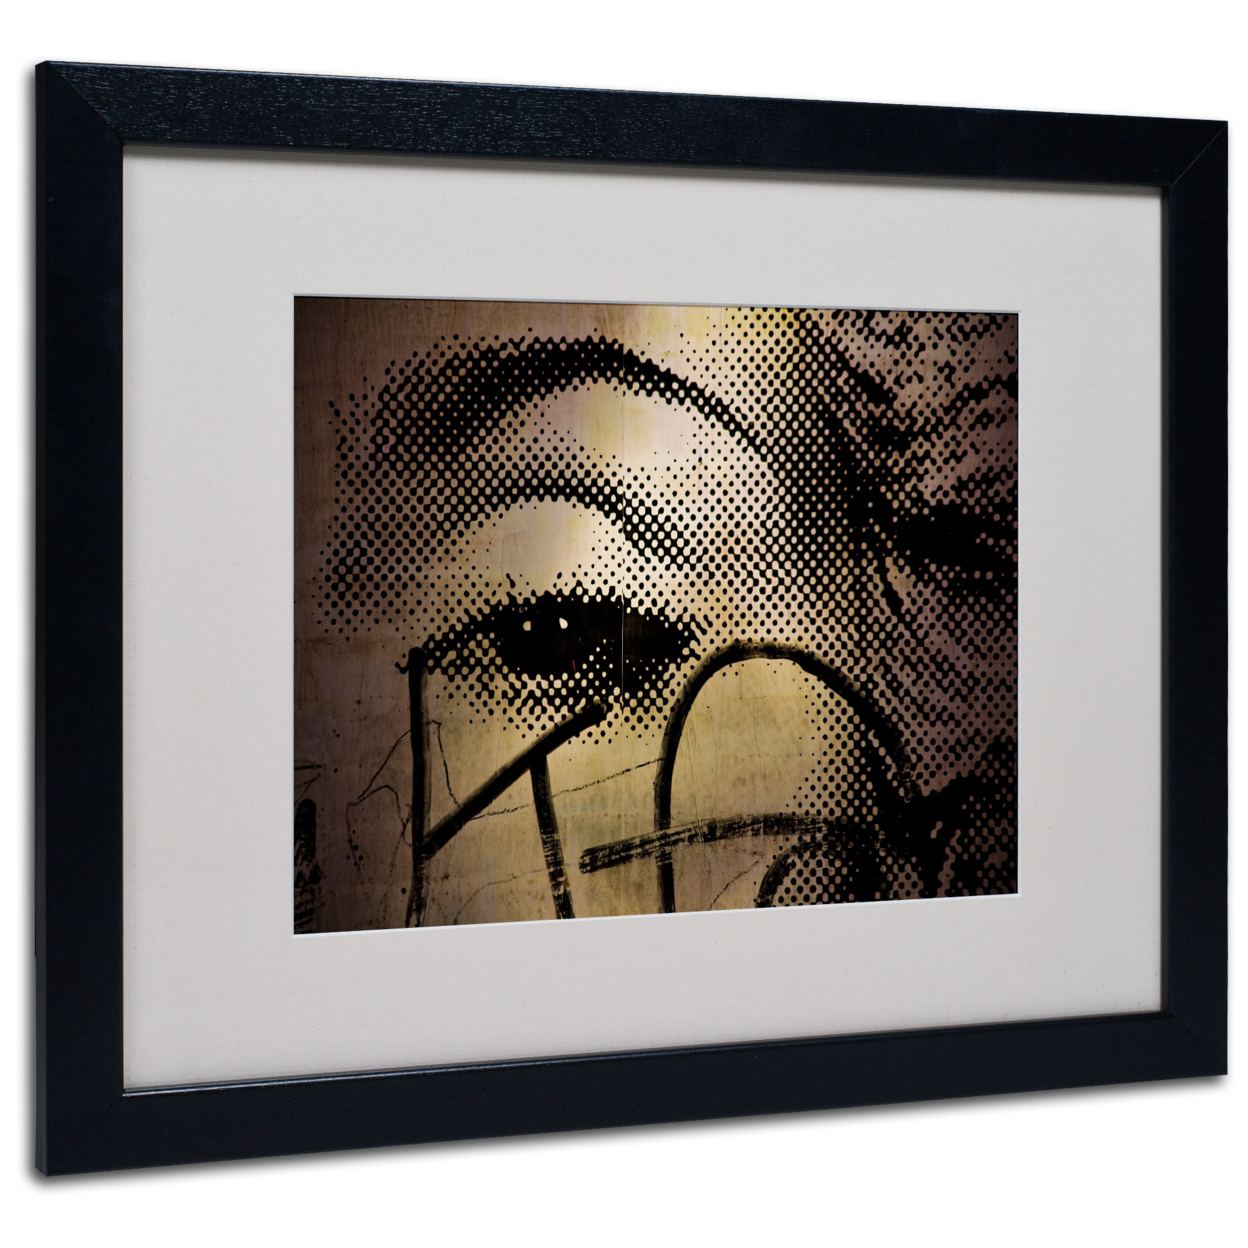 Yale Gurney 'Madonna Eye Pop Art' Black Wooden Framed Art 18 X 22 Inches